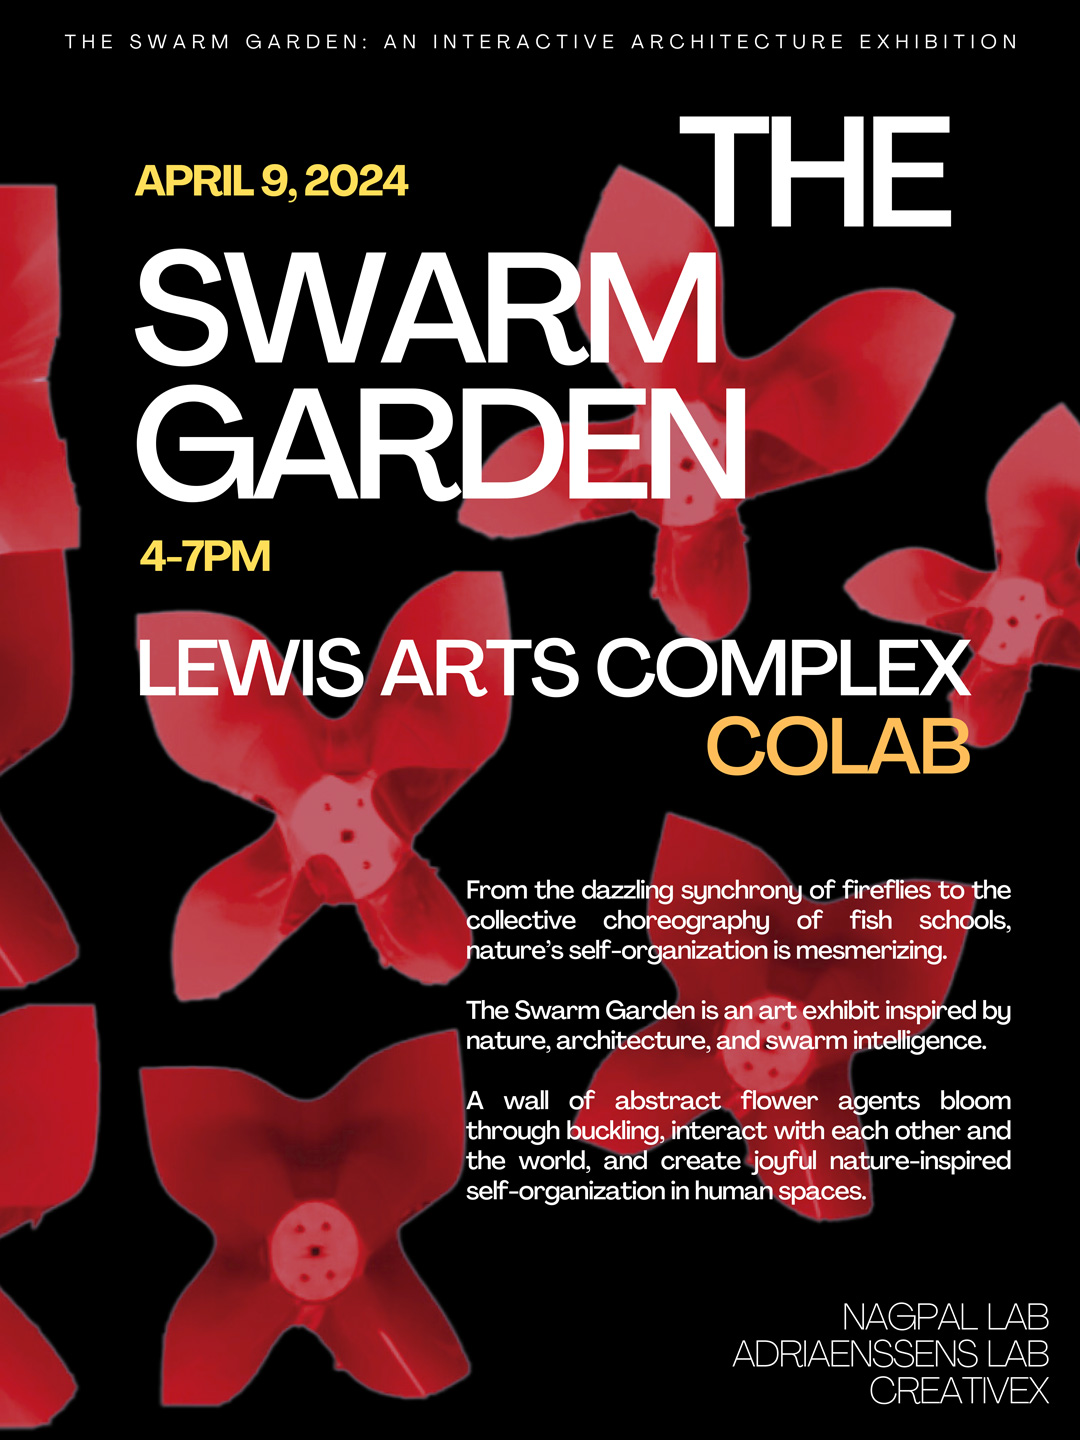 The Swarm Garden Interactive Architecture Exhibition on April 9